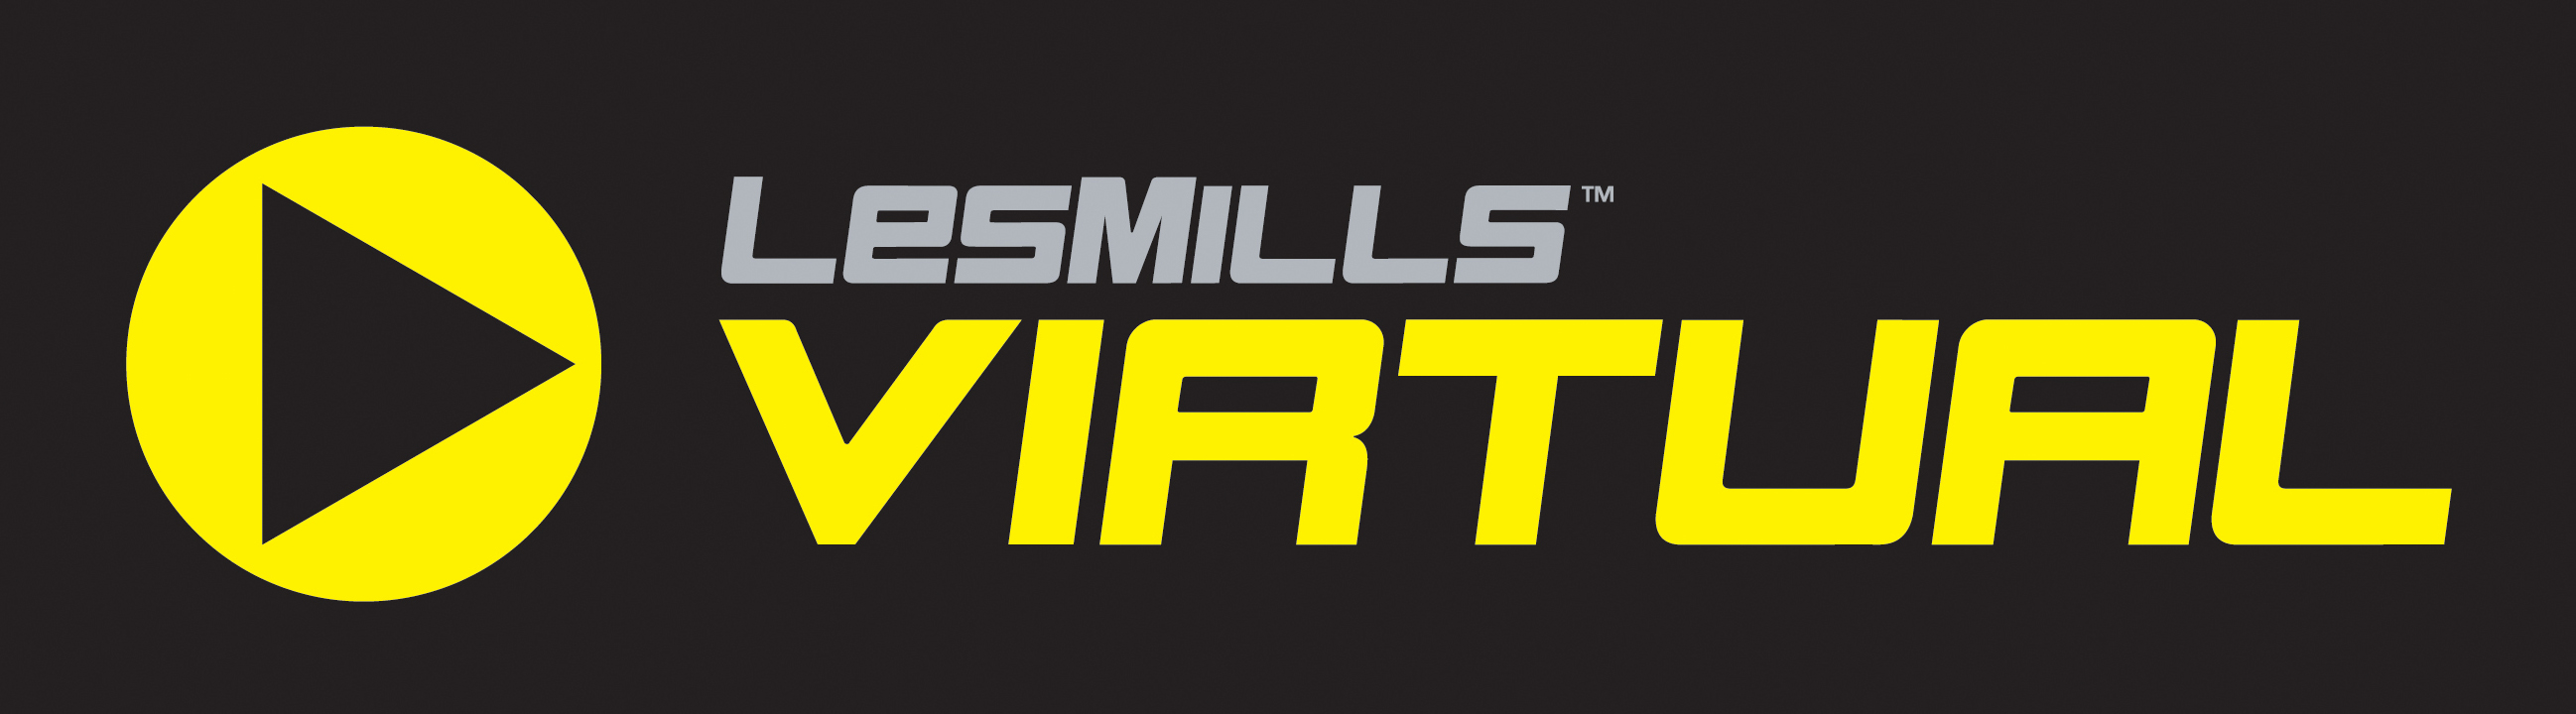 Les Mills Virtual® Platform Provider